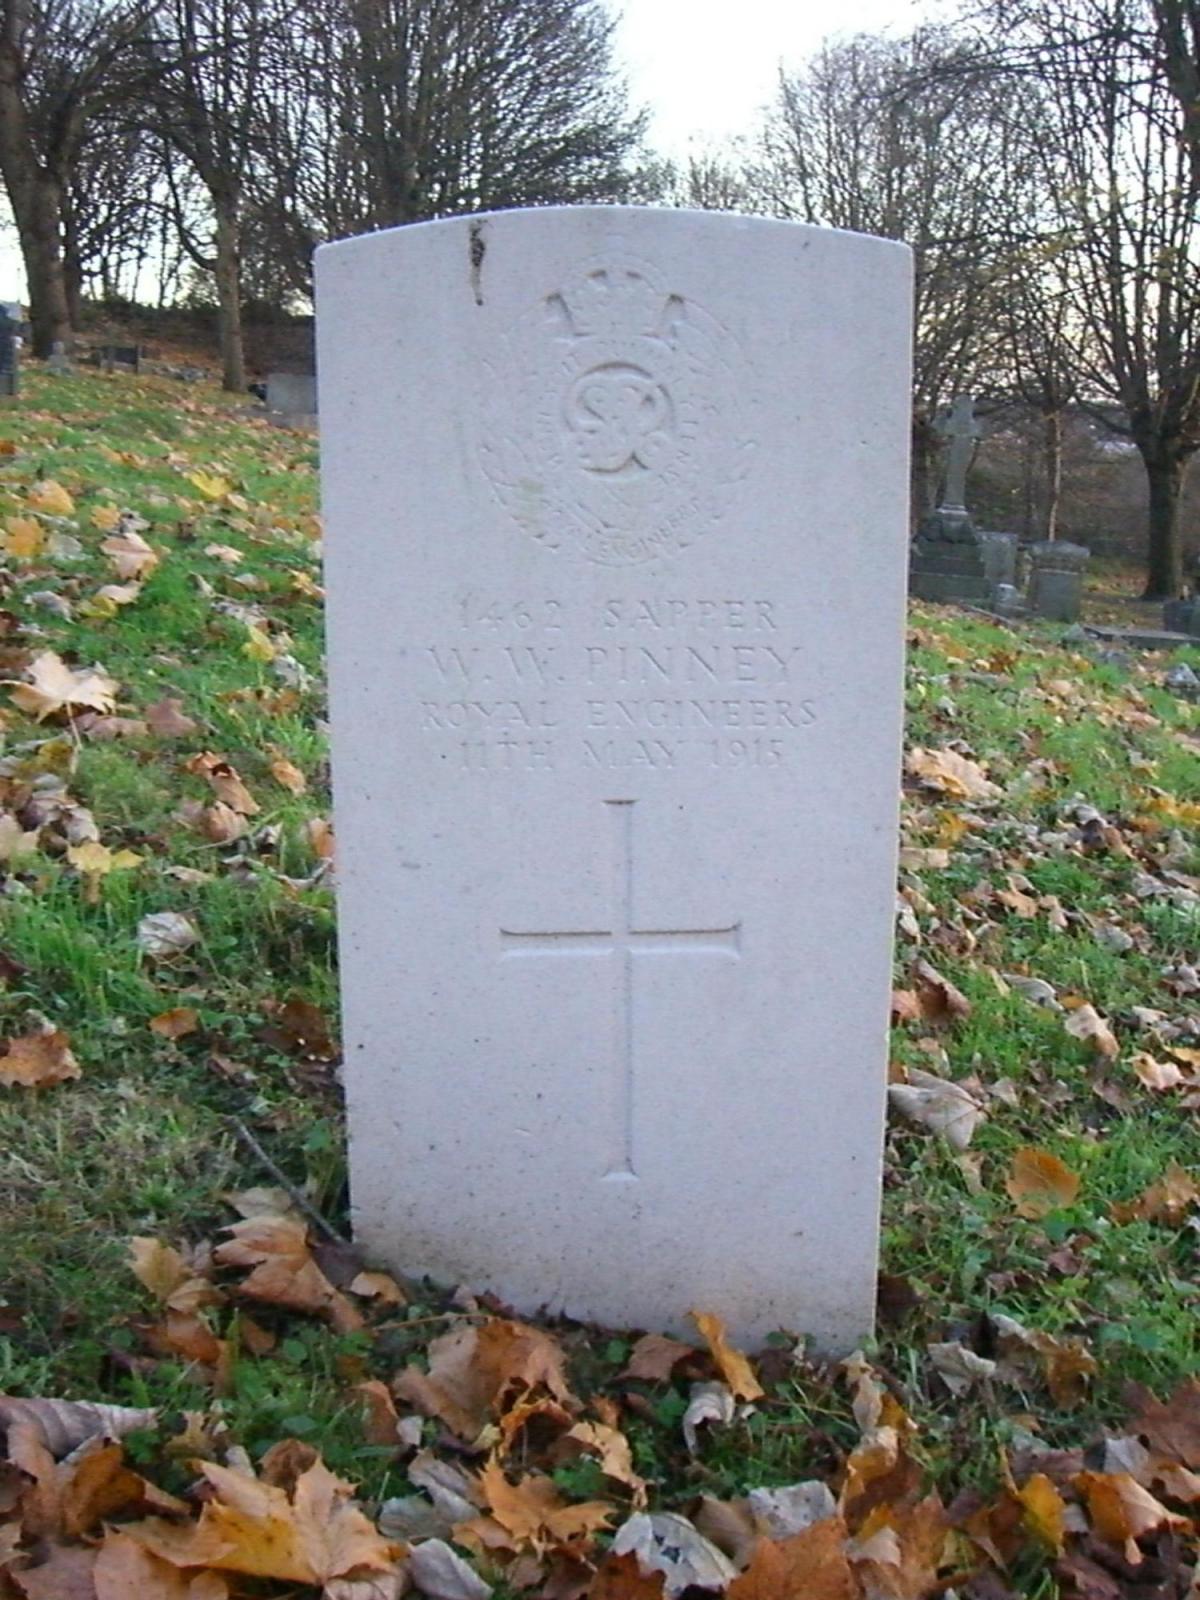 Gravestone of Walter William Pinney